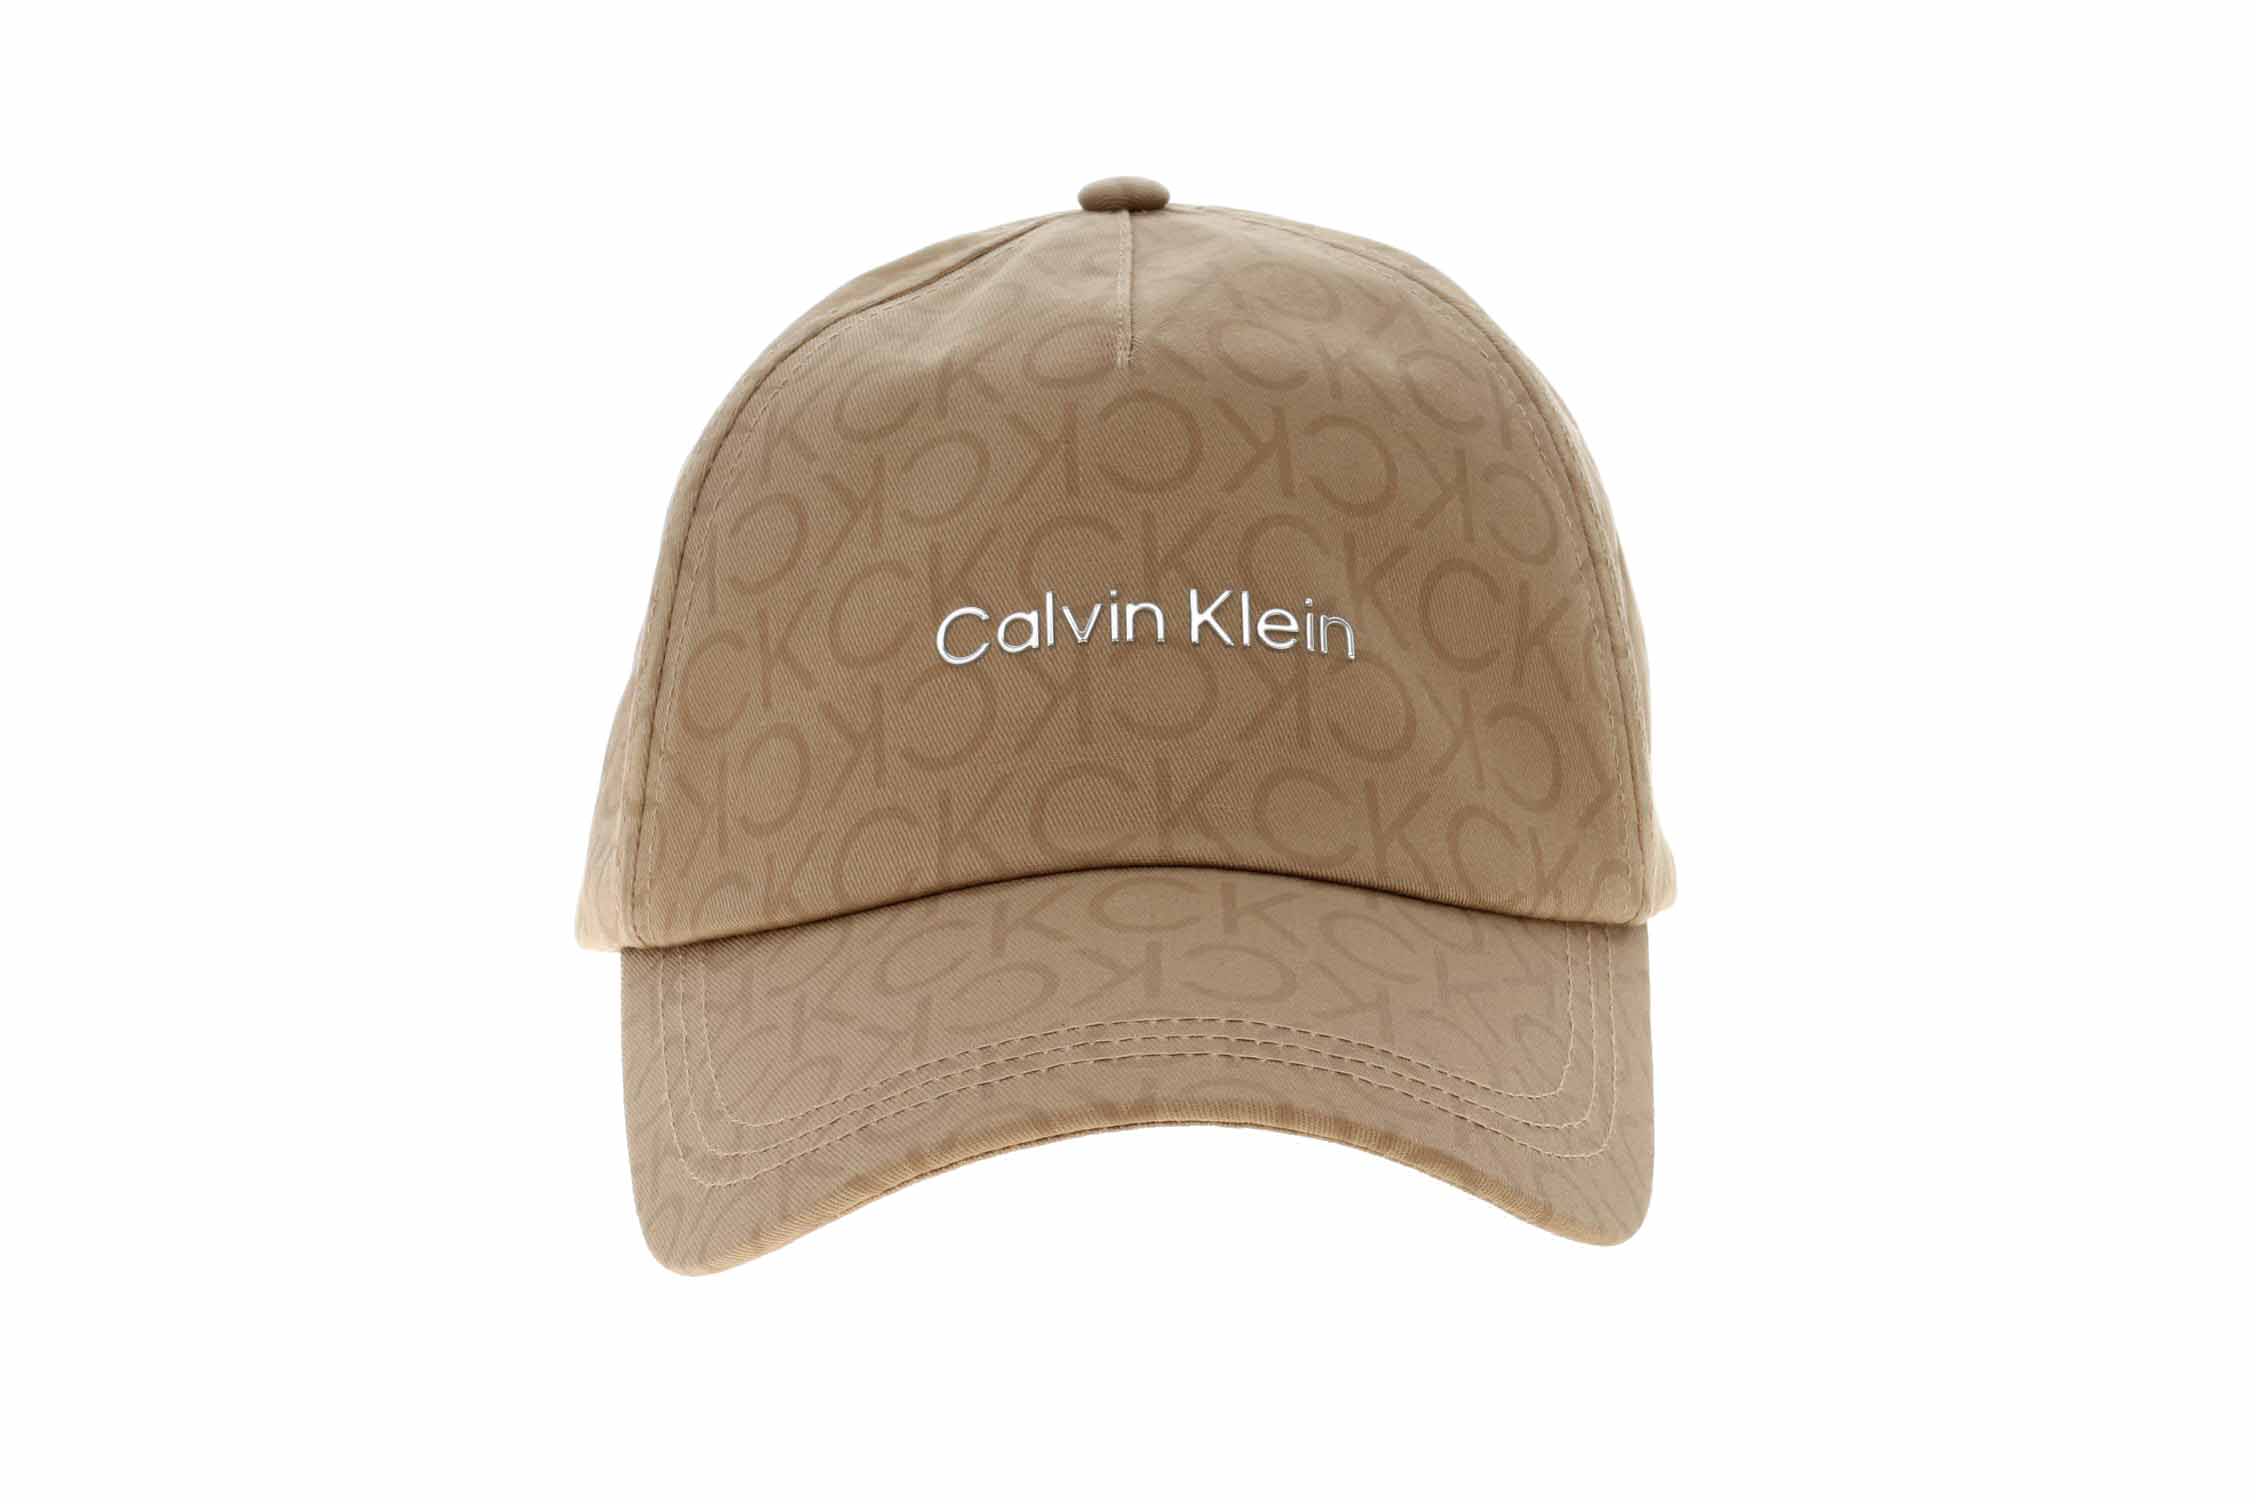 Calvin Klein dámská kšiltovka